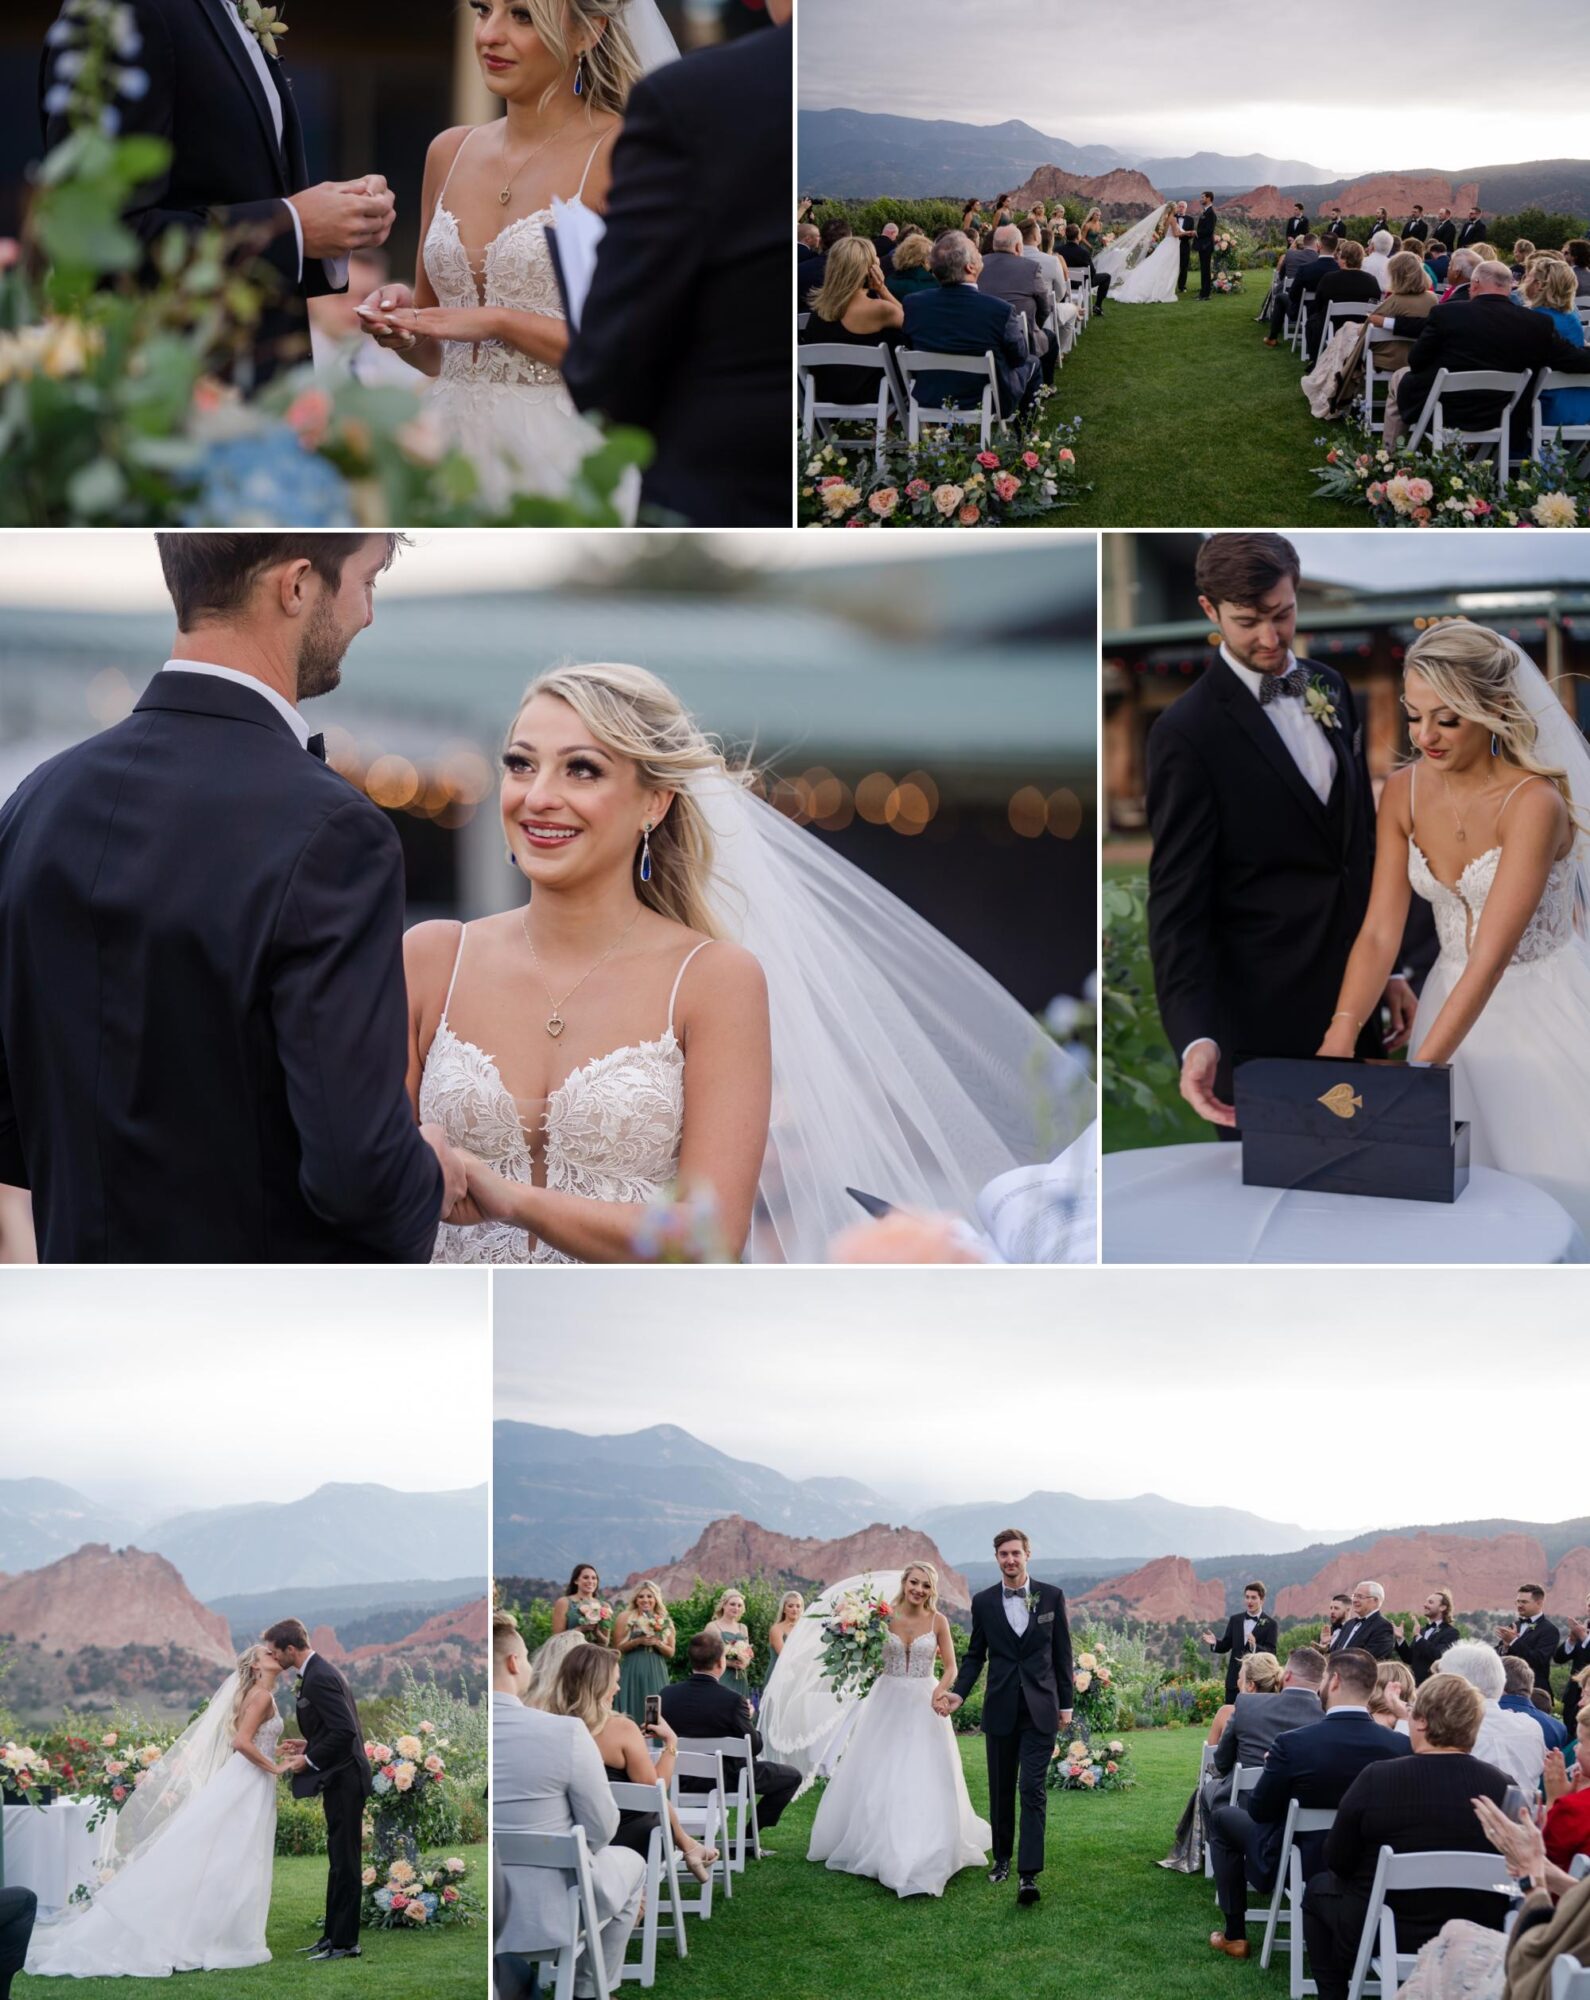 Colorado Springs destinations for weddings